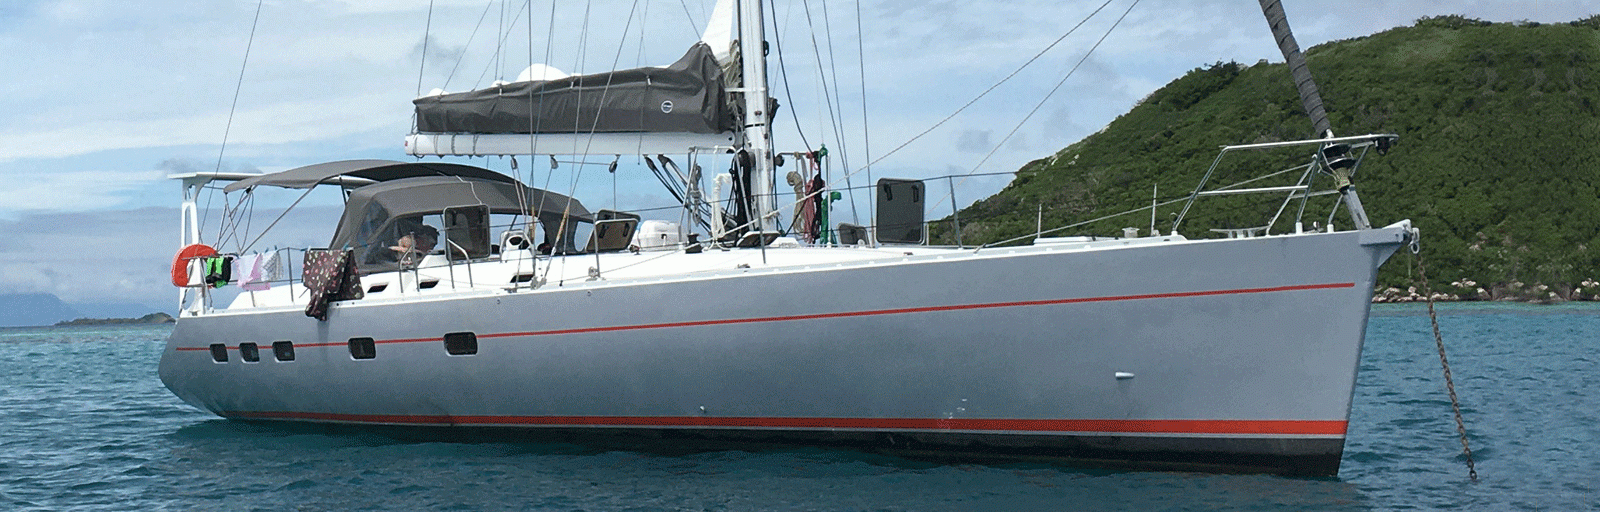 Cigale 16 - AYC Yachtbroker